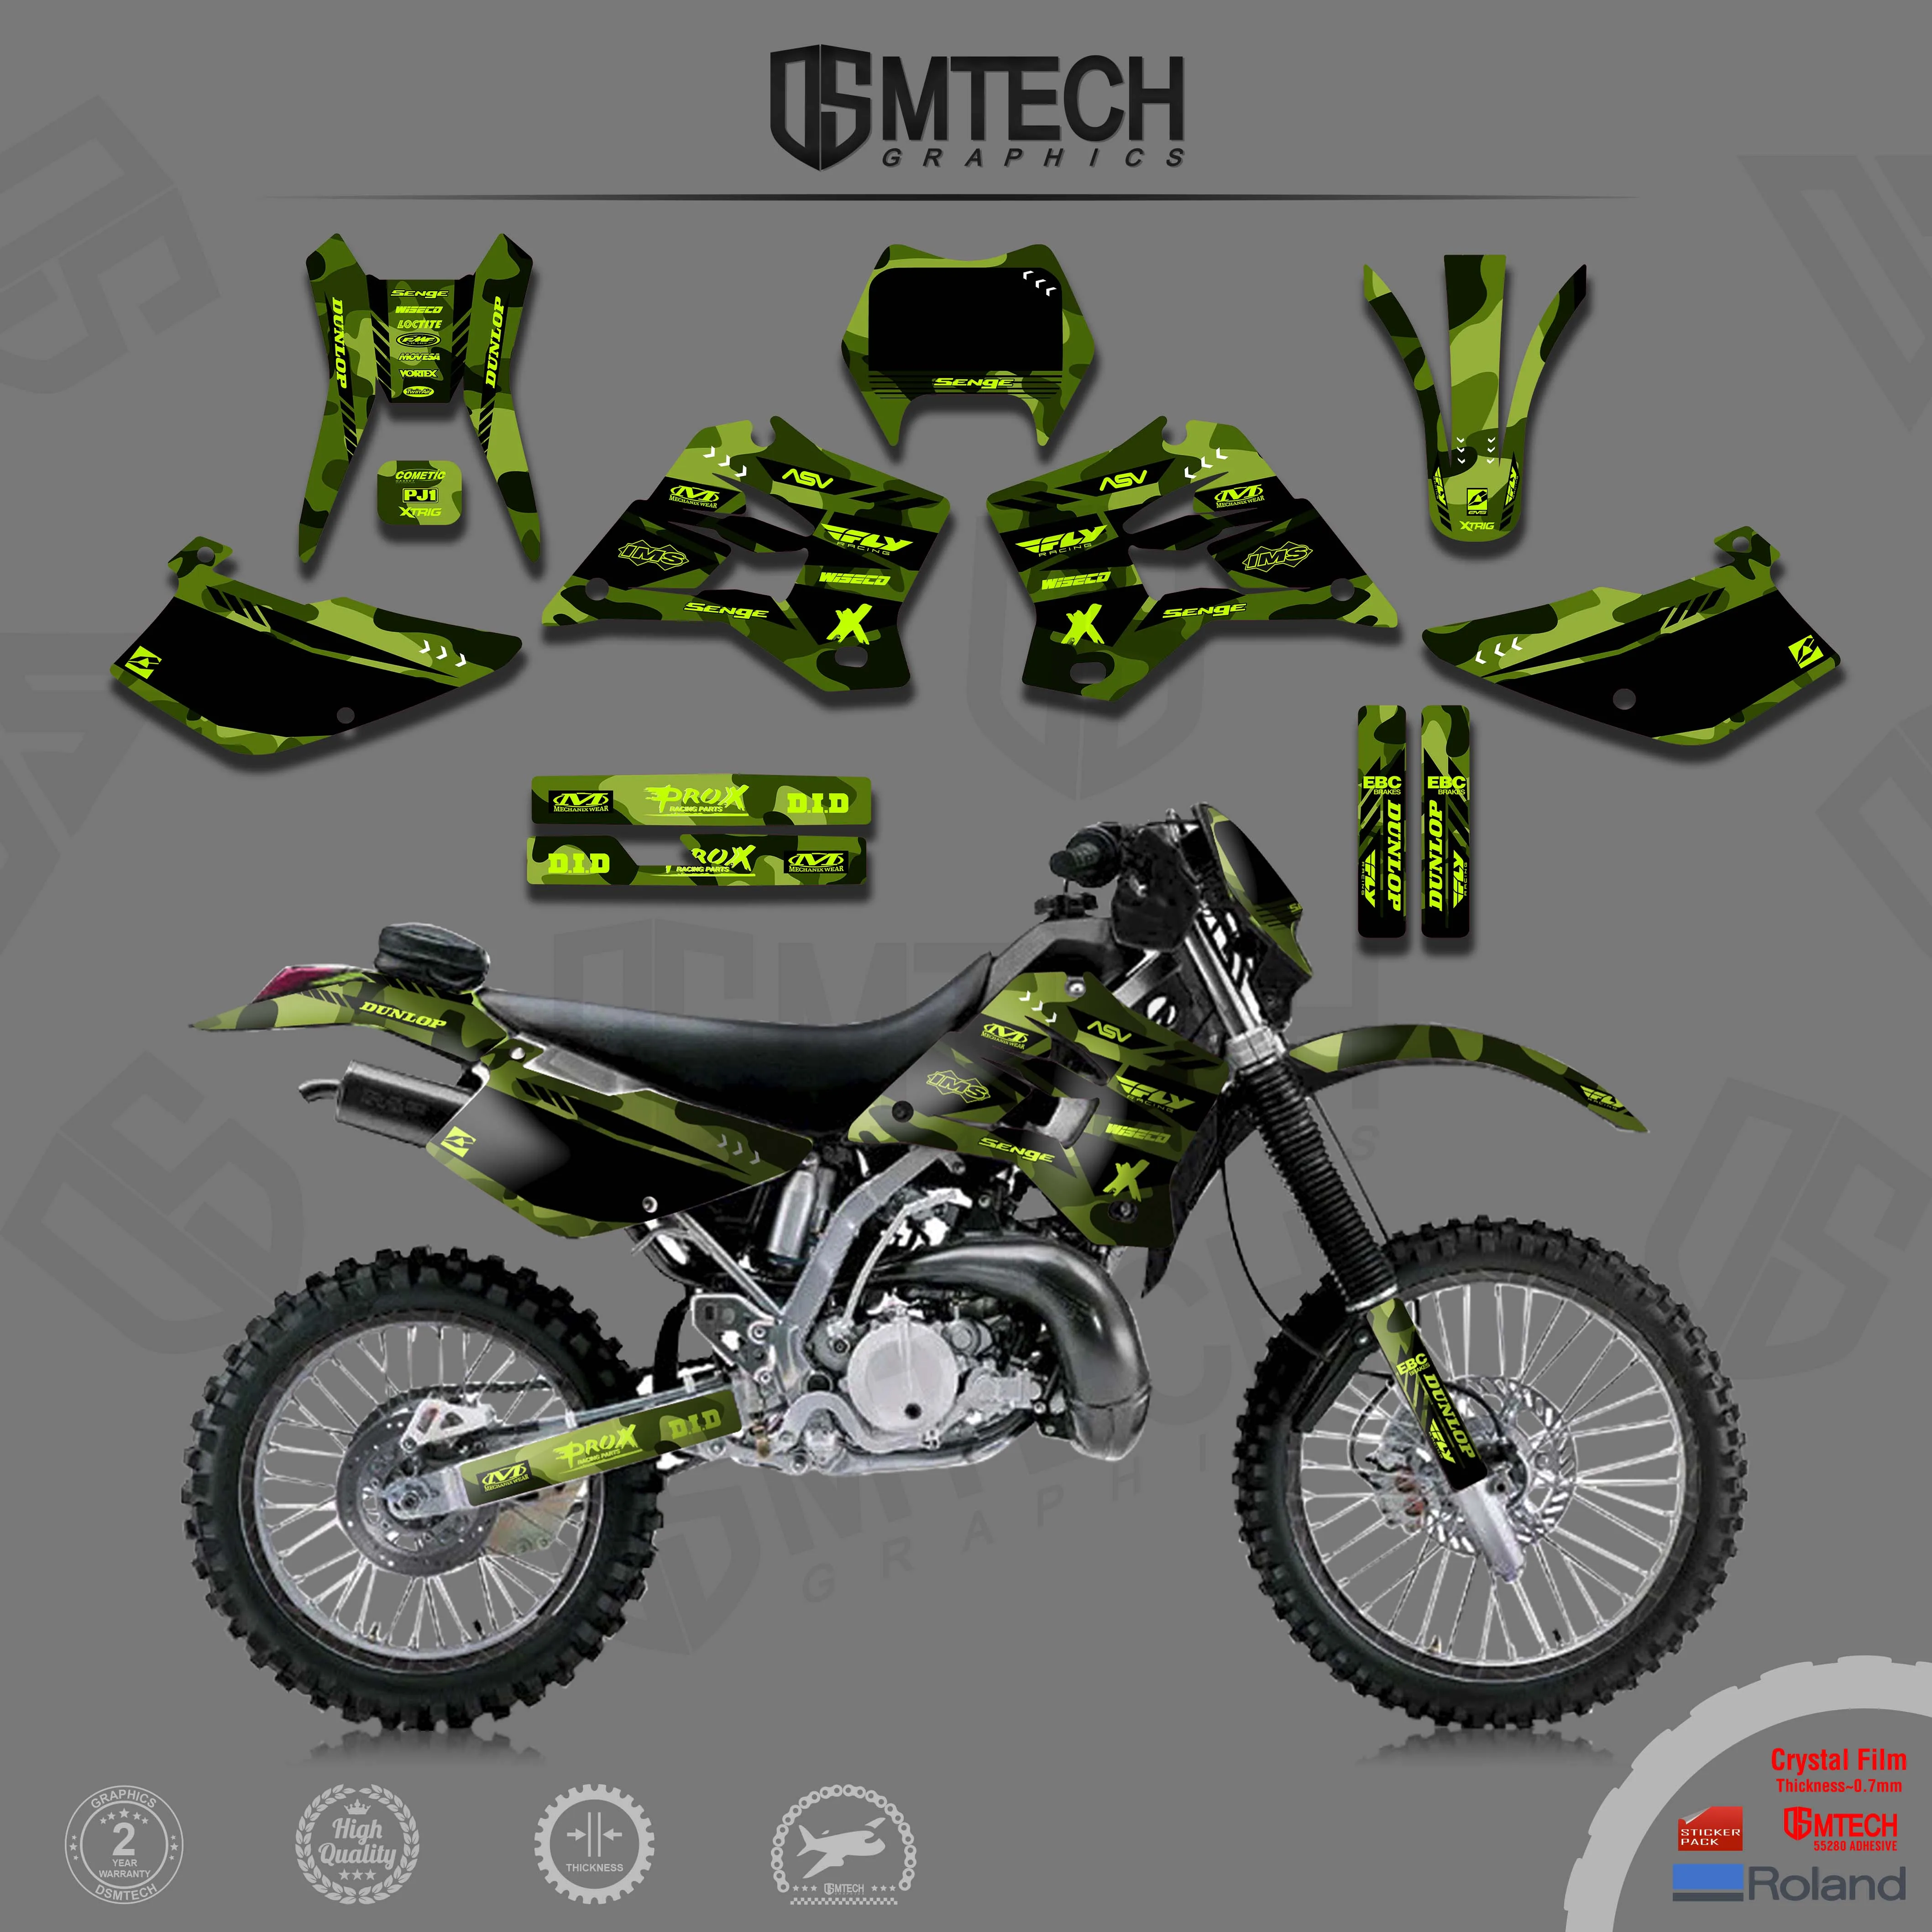 DSMTECH Motocross Decals Stickers Graphics Kits For Kawasaki 1995 1996 1997 1998 1999 2000 2001 2002 2003-2006 KDX 200-220 002